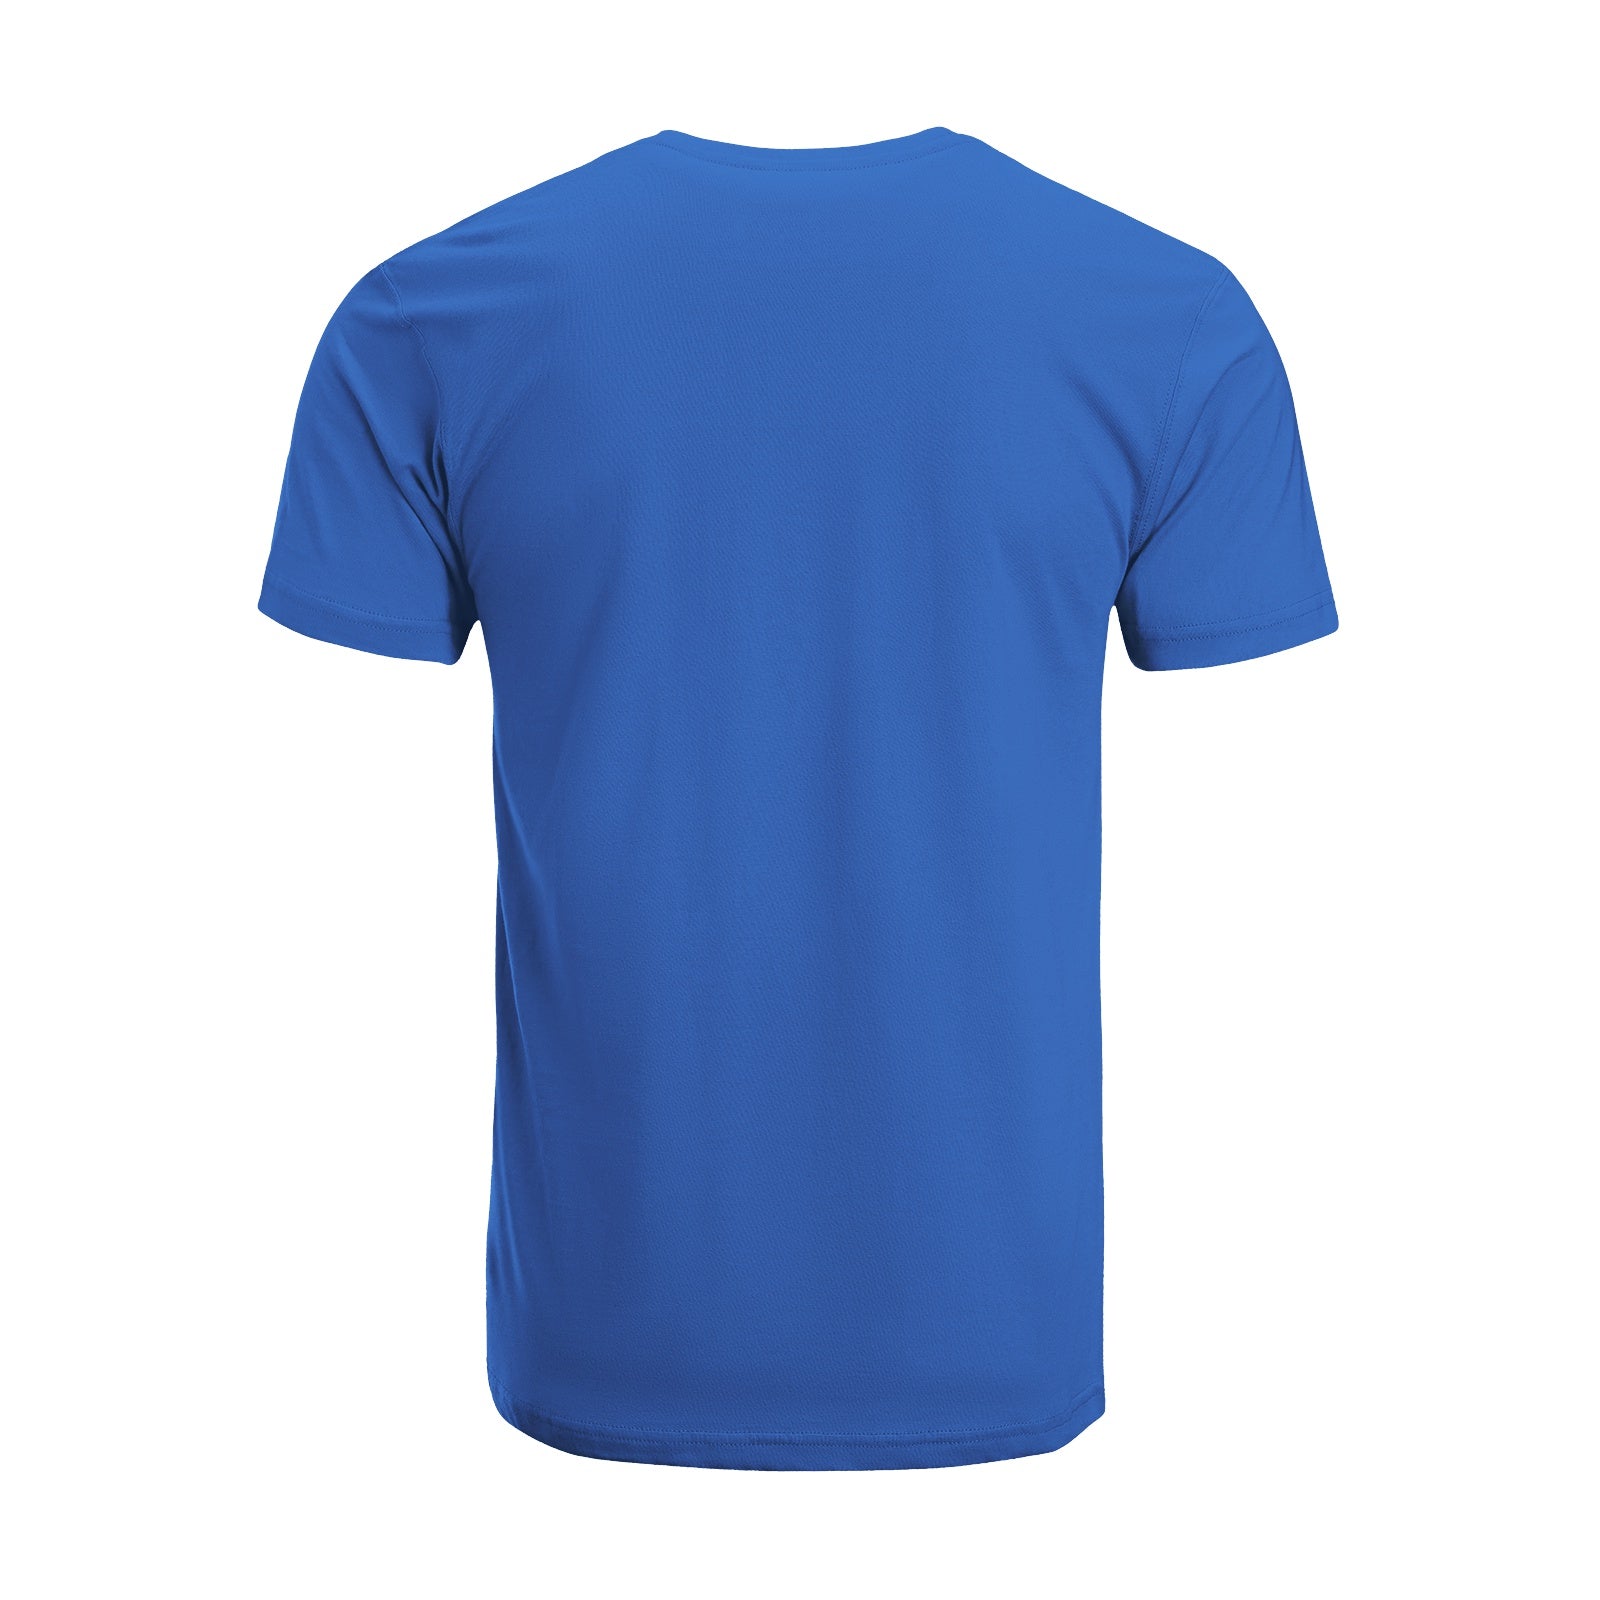 Unisex Short Sleeve Crew Neck Cotton Jersey T-Shirt CAT 44 - Tara-Outfits.com